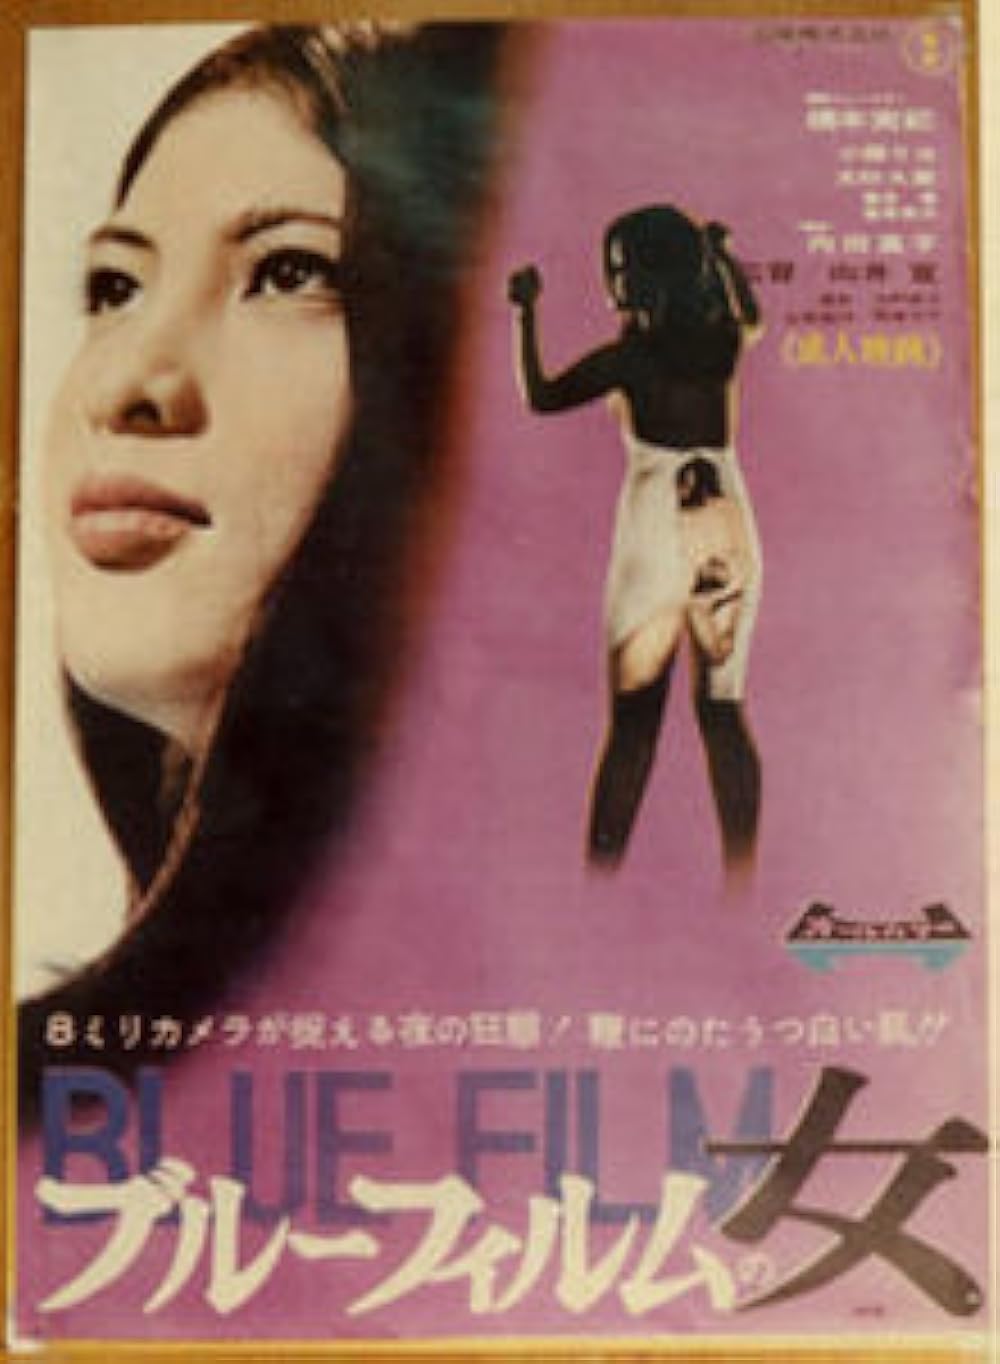 cristina manrique recommends blue film free download pic